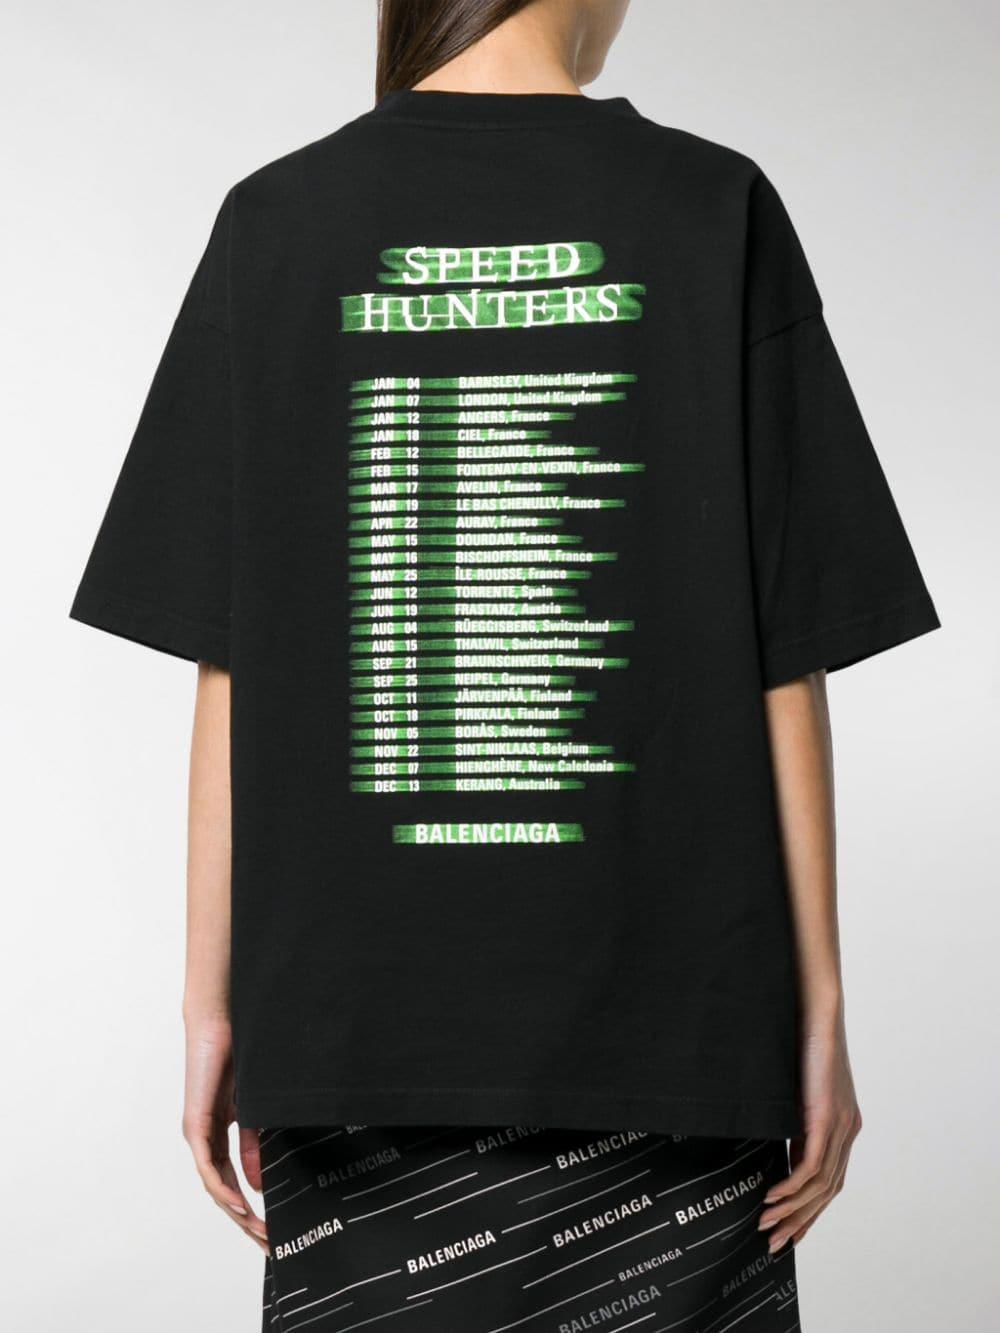 Balenciaga Speedhunters T Shirt Online UP 61% OFF